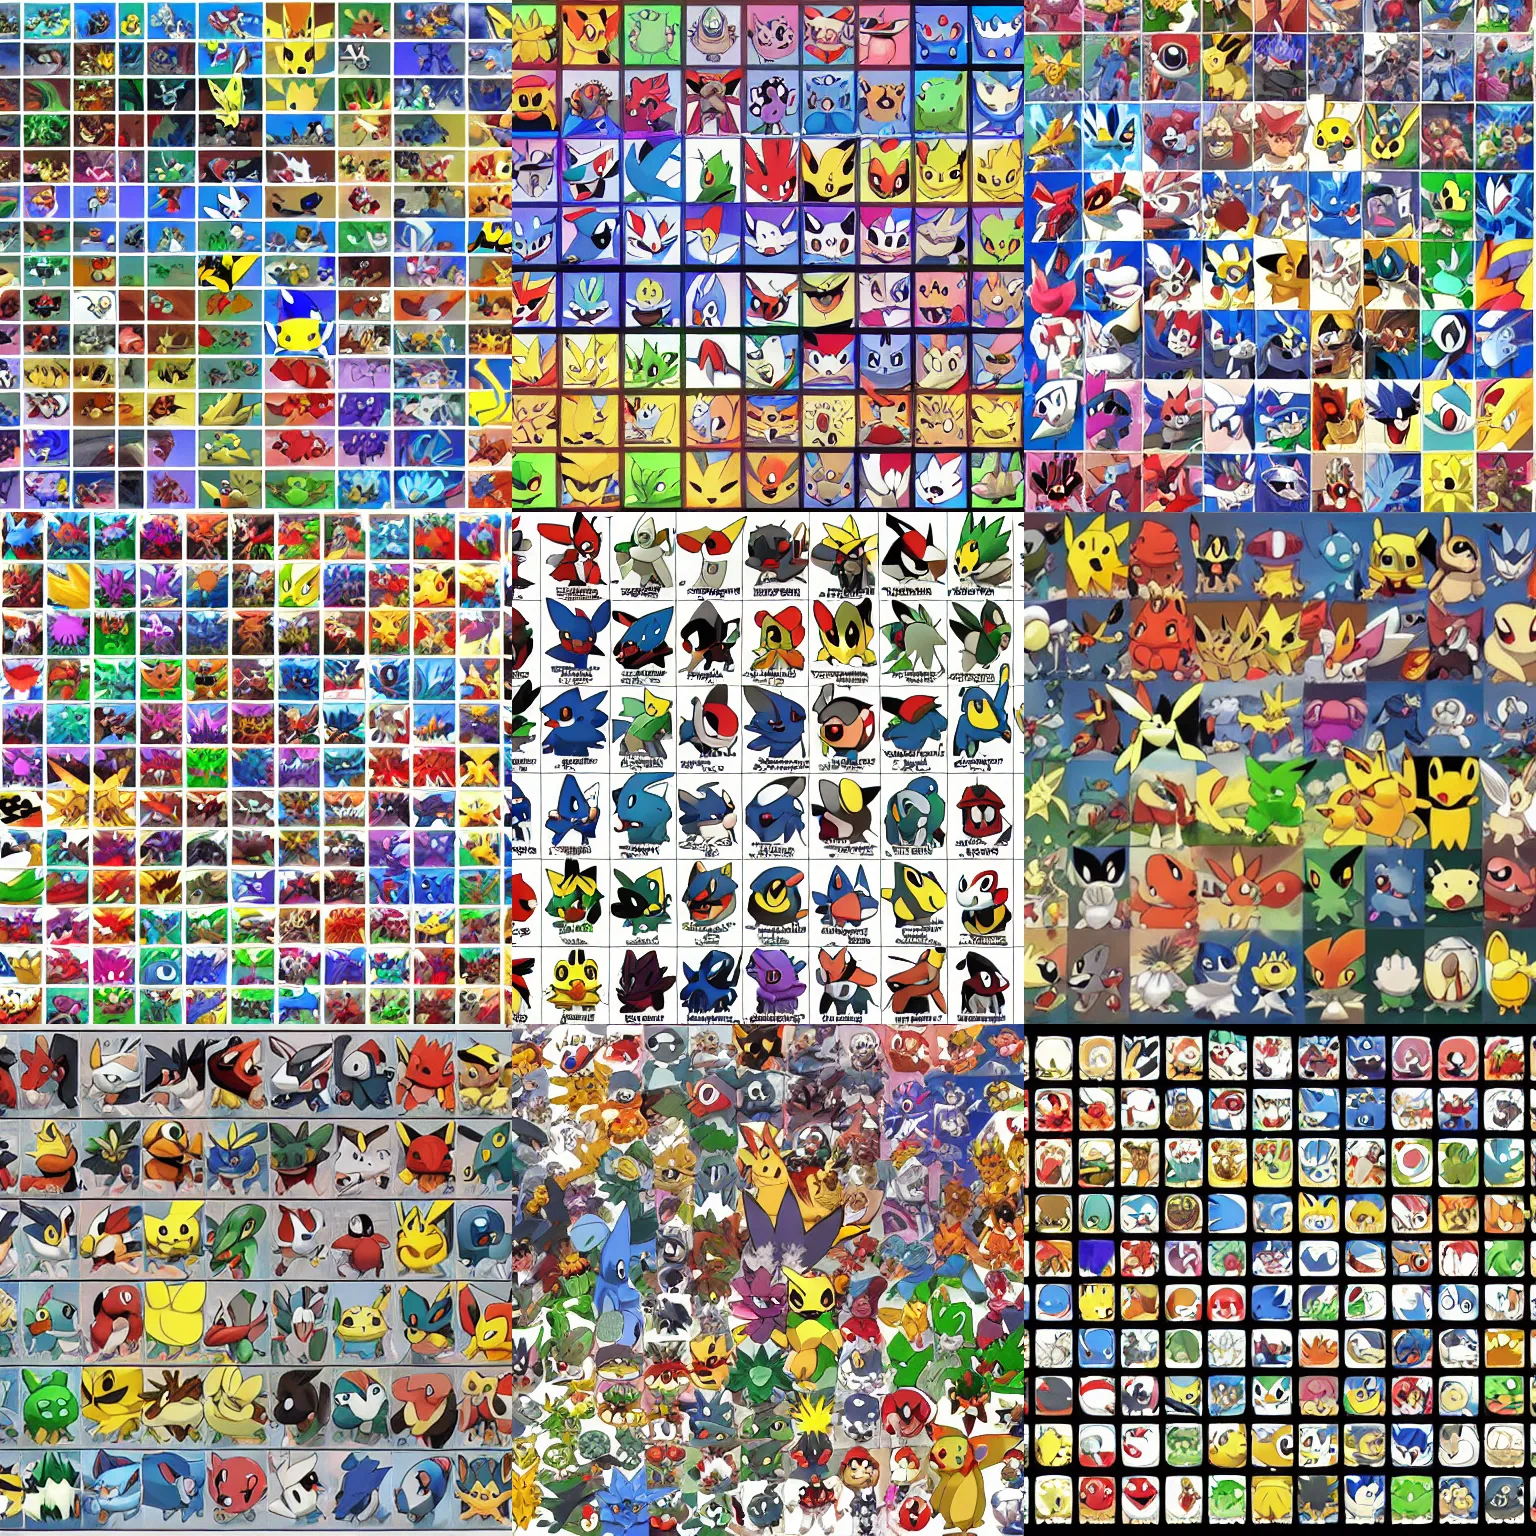 Prompt: collage of all 1 5 1 original pokemon